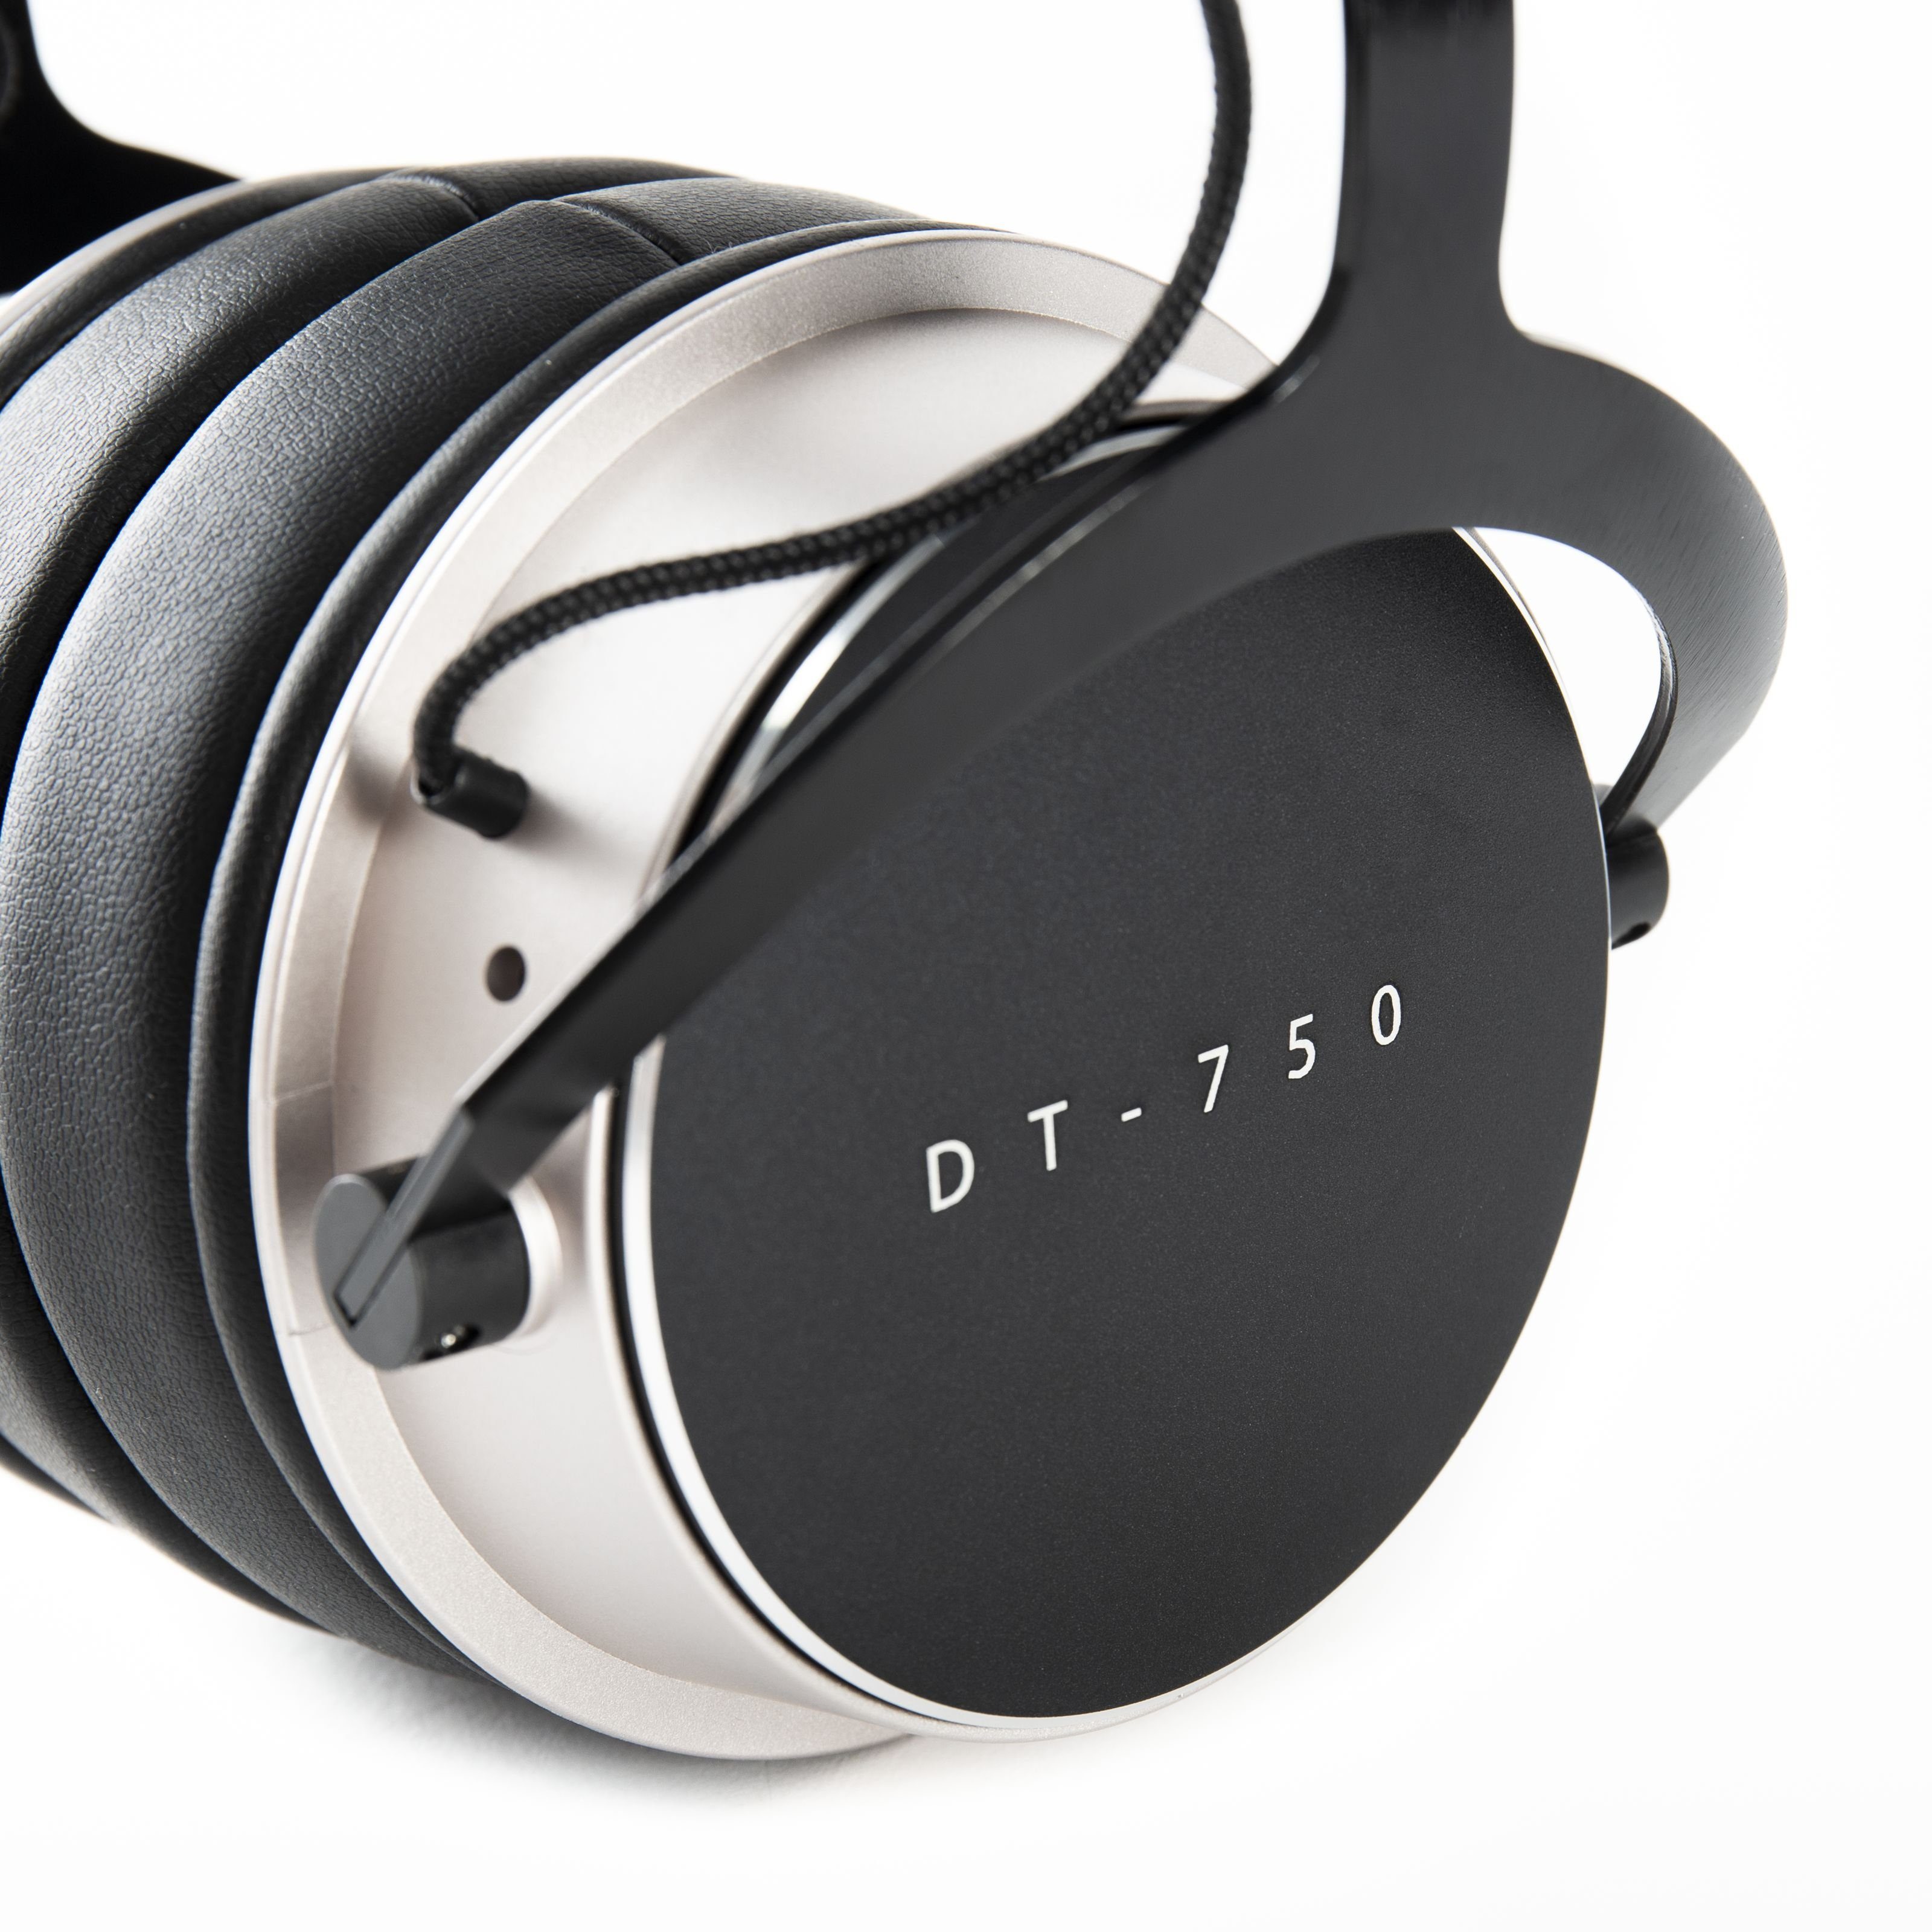 mit Kopfhörer Fame Kopfhörer geschlossen Audio Kabel) Kopfhörer, (DT-750 abnehmbaren Studio